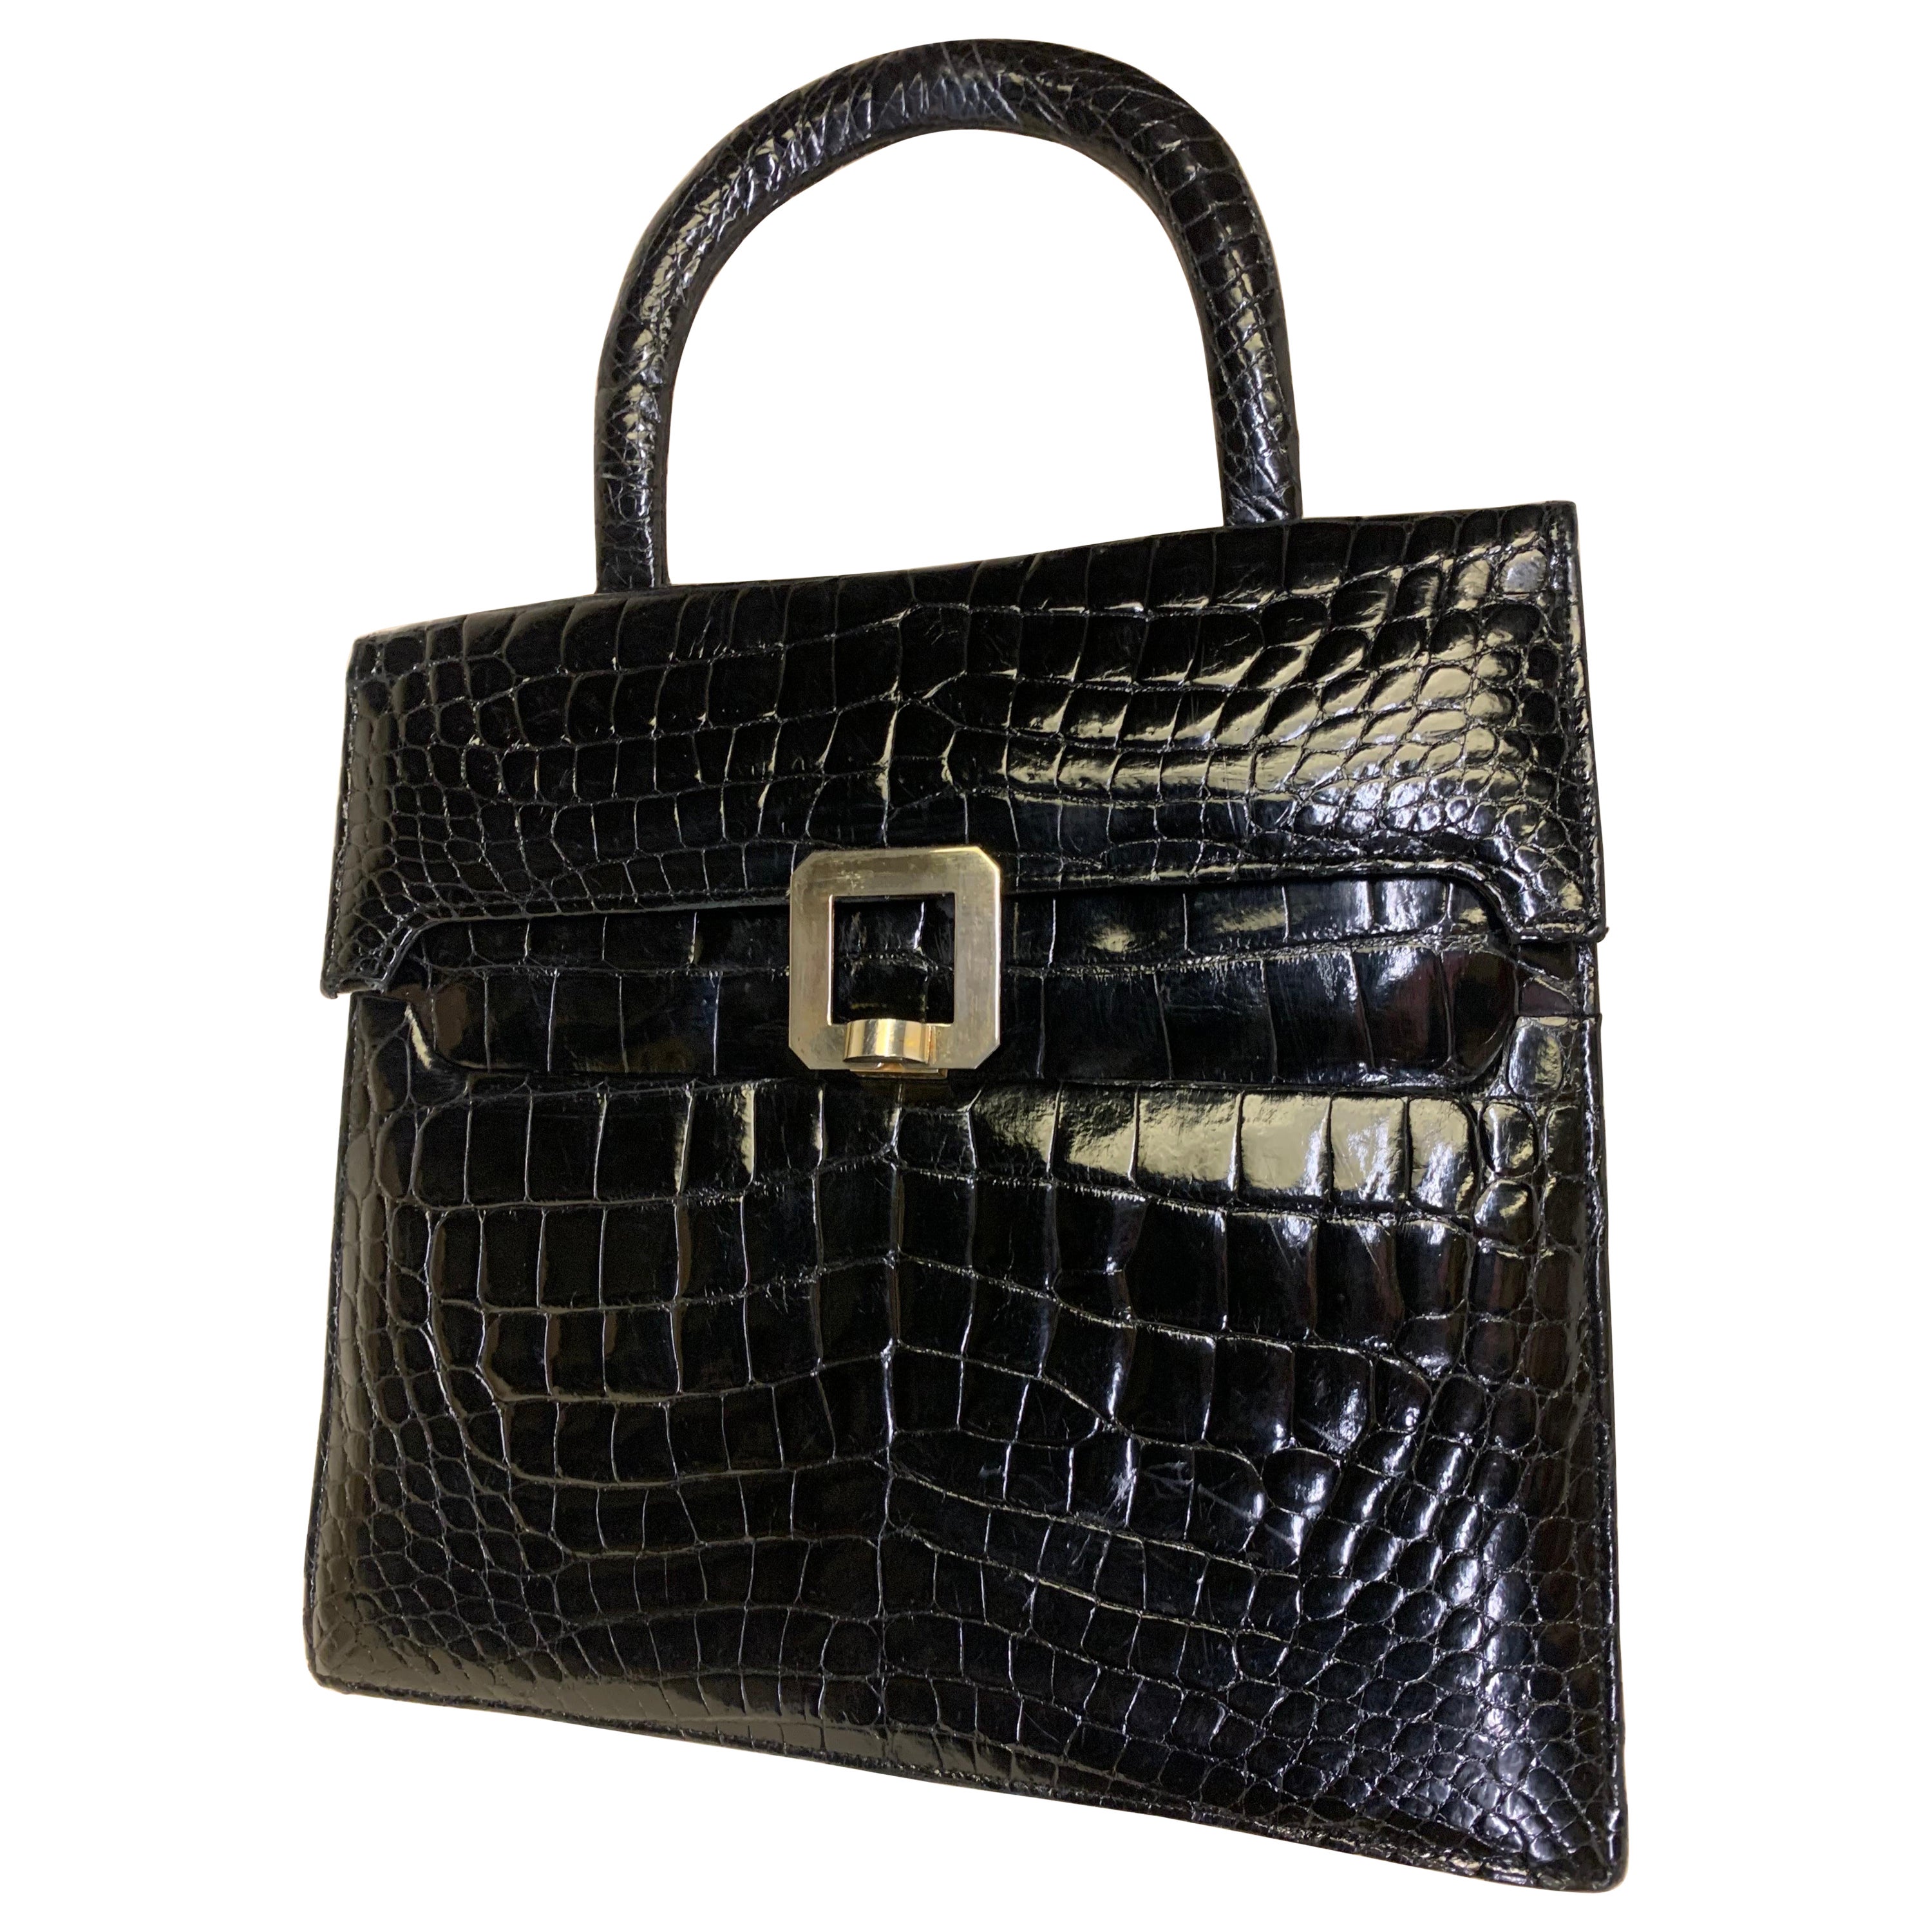 1960s Genuine Black Alligator Tailored Top-Handle Handbag w/ Silver Buckle